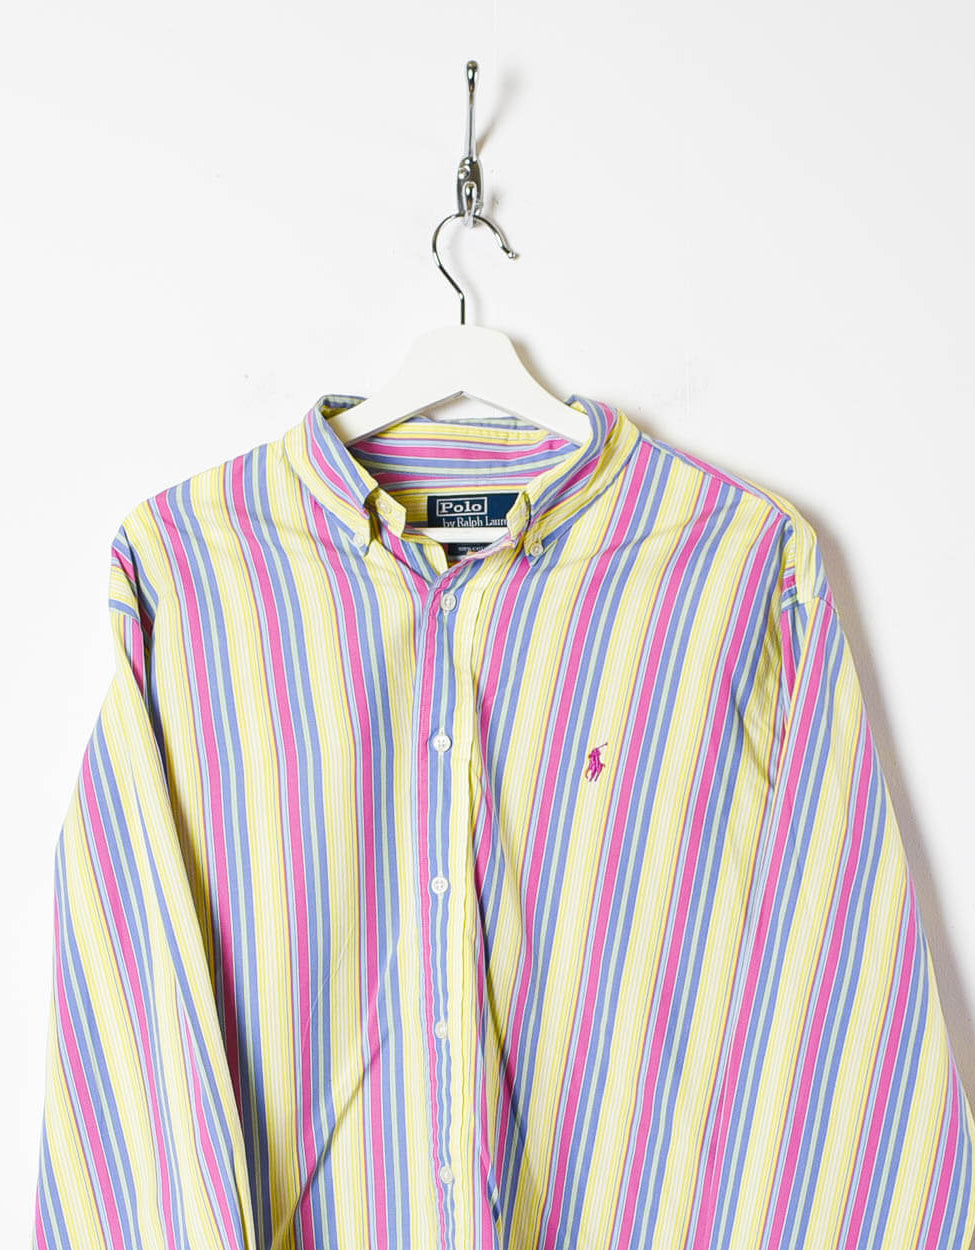 Yellow Polo Ralph Lauren Shirt - Large